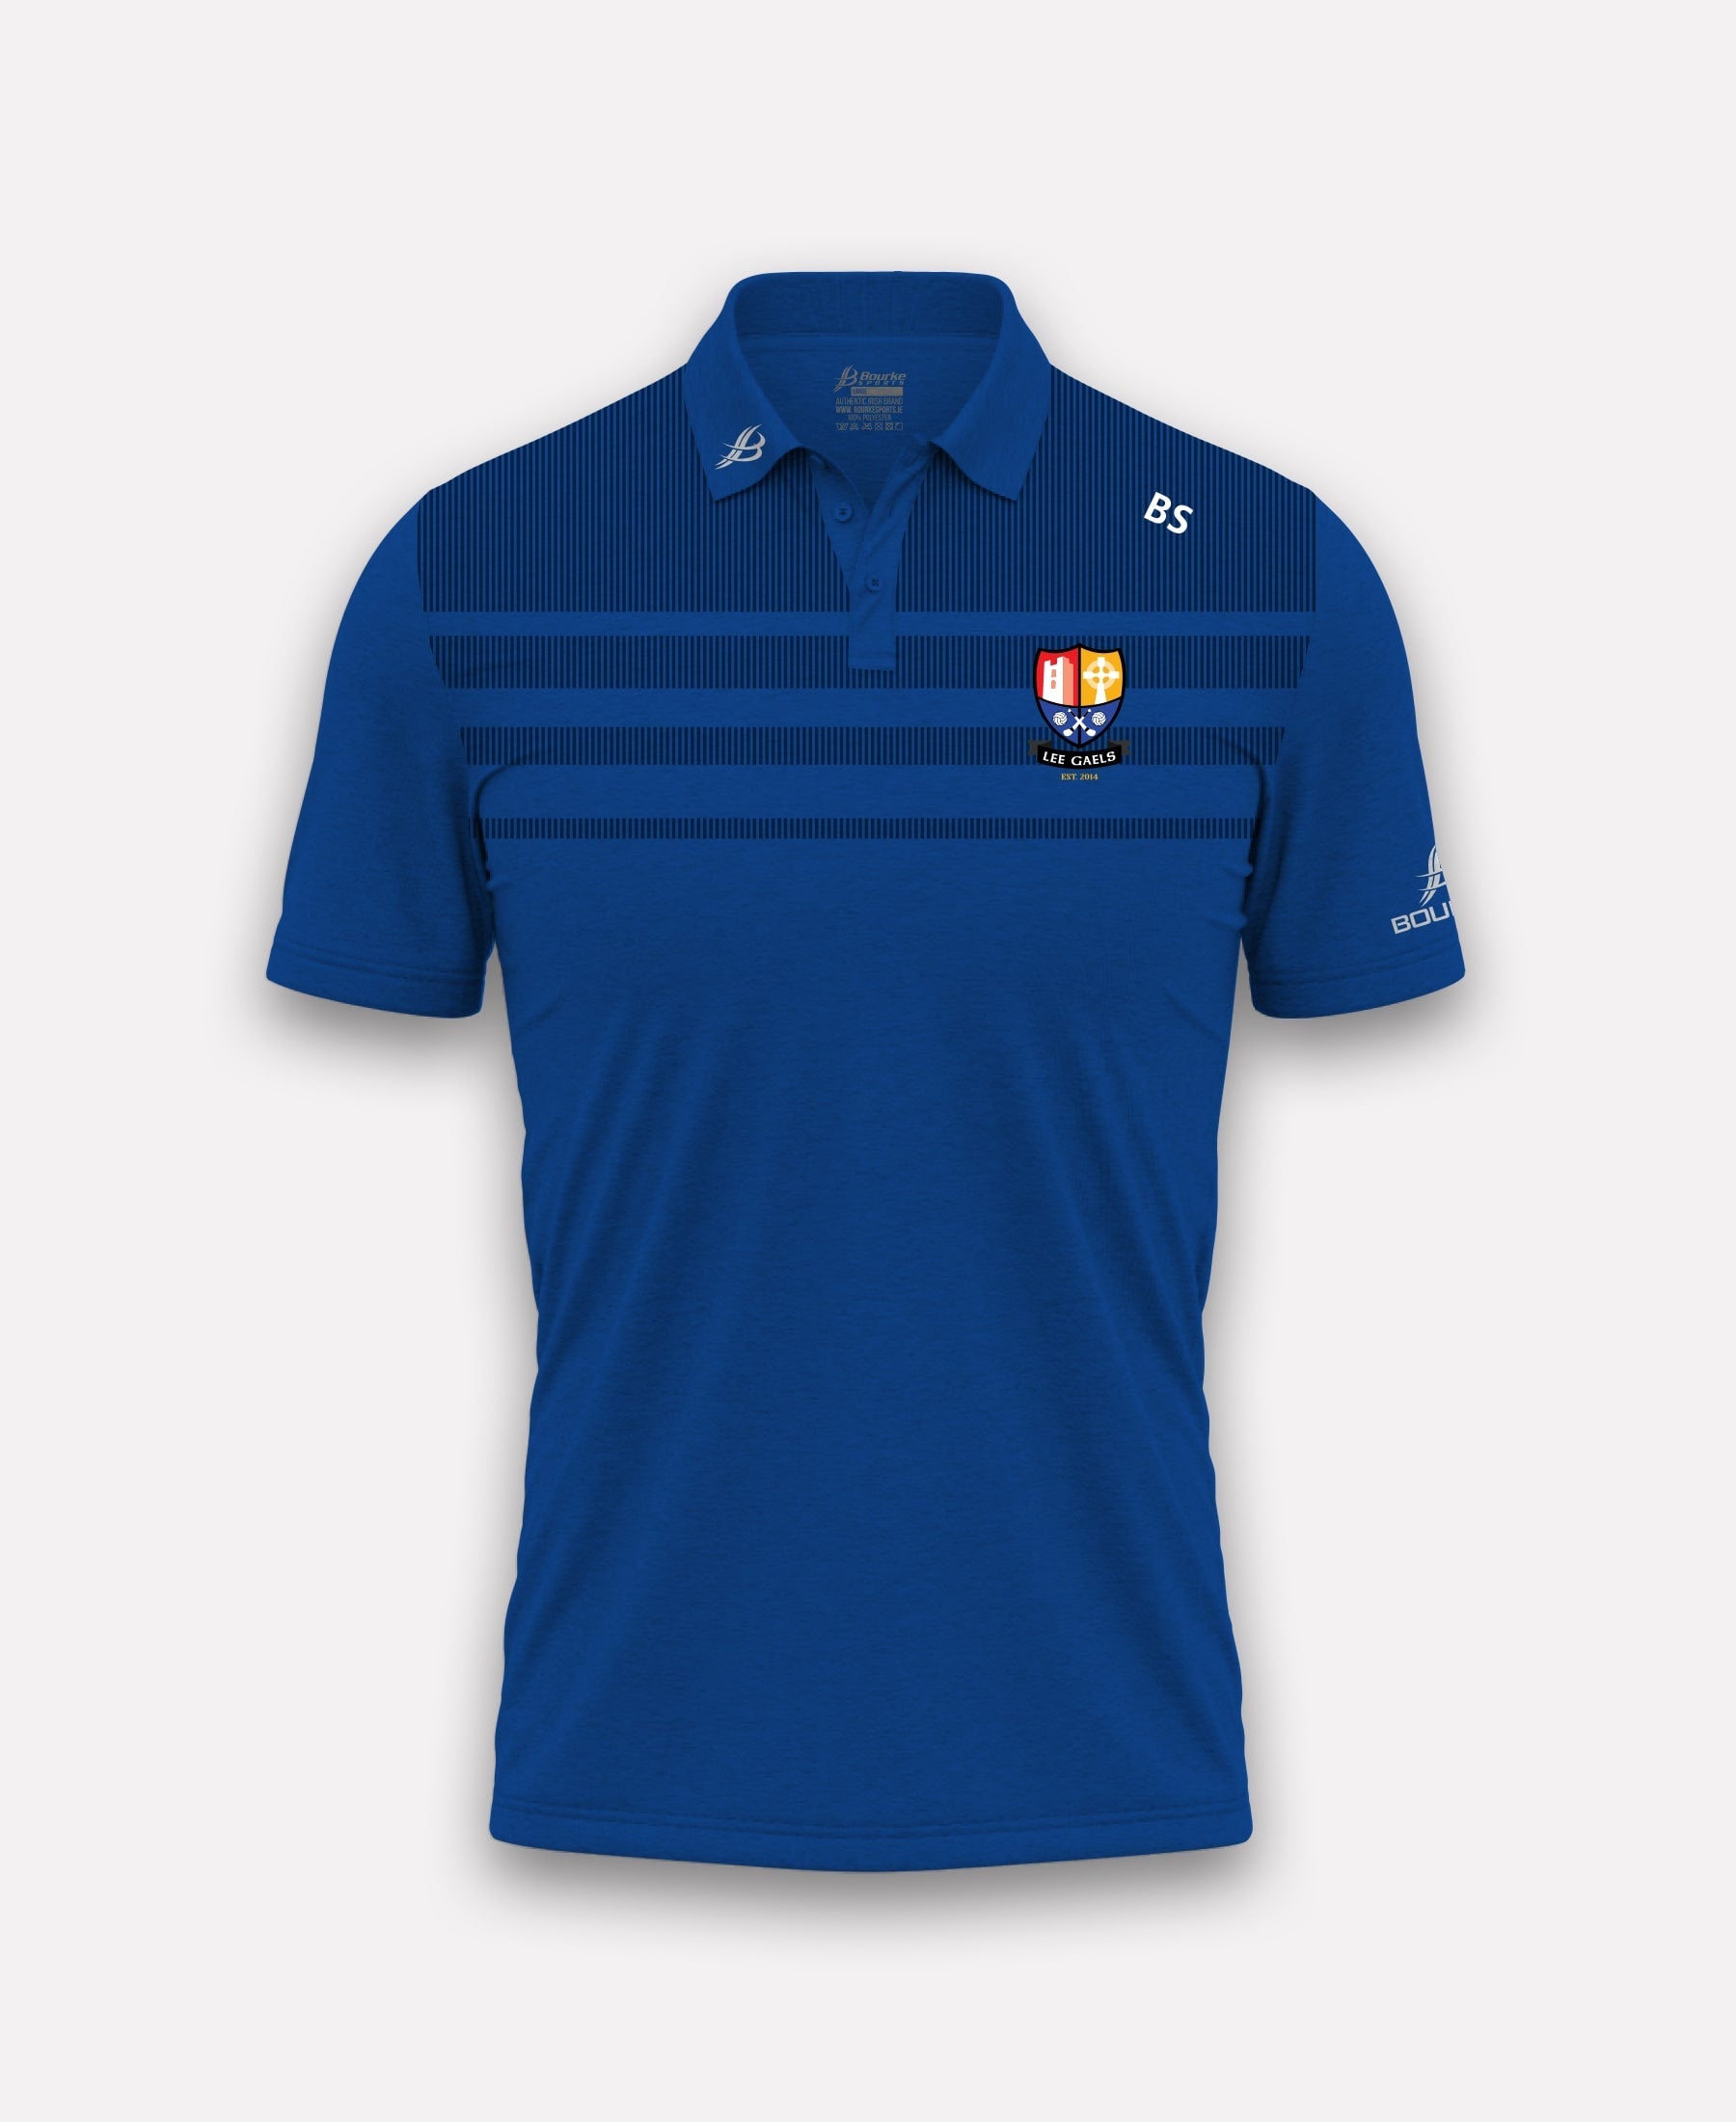 Lee Gaels GAA TACA Polo Shirt Blue